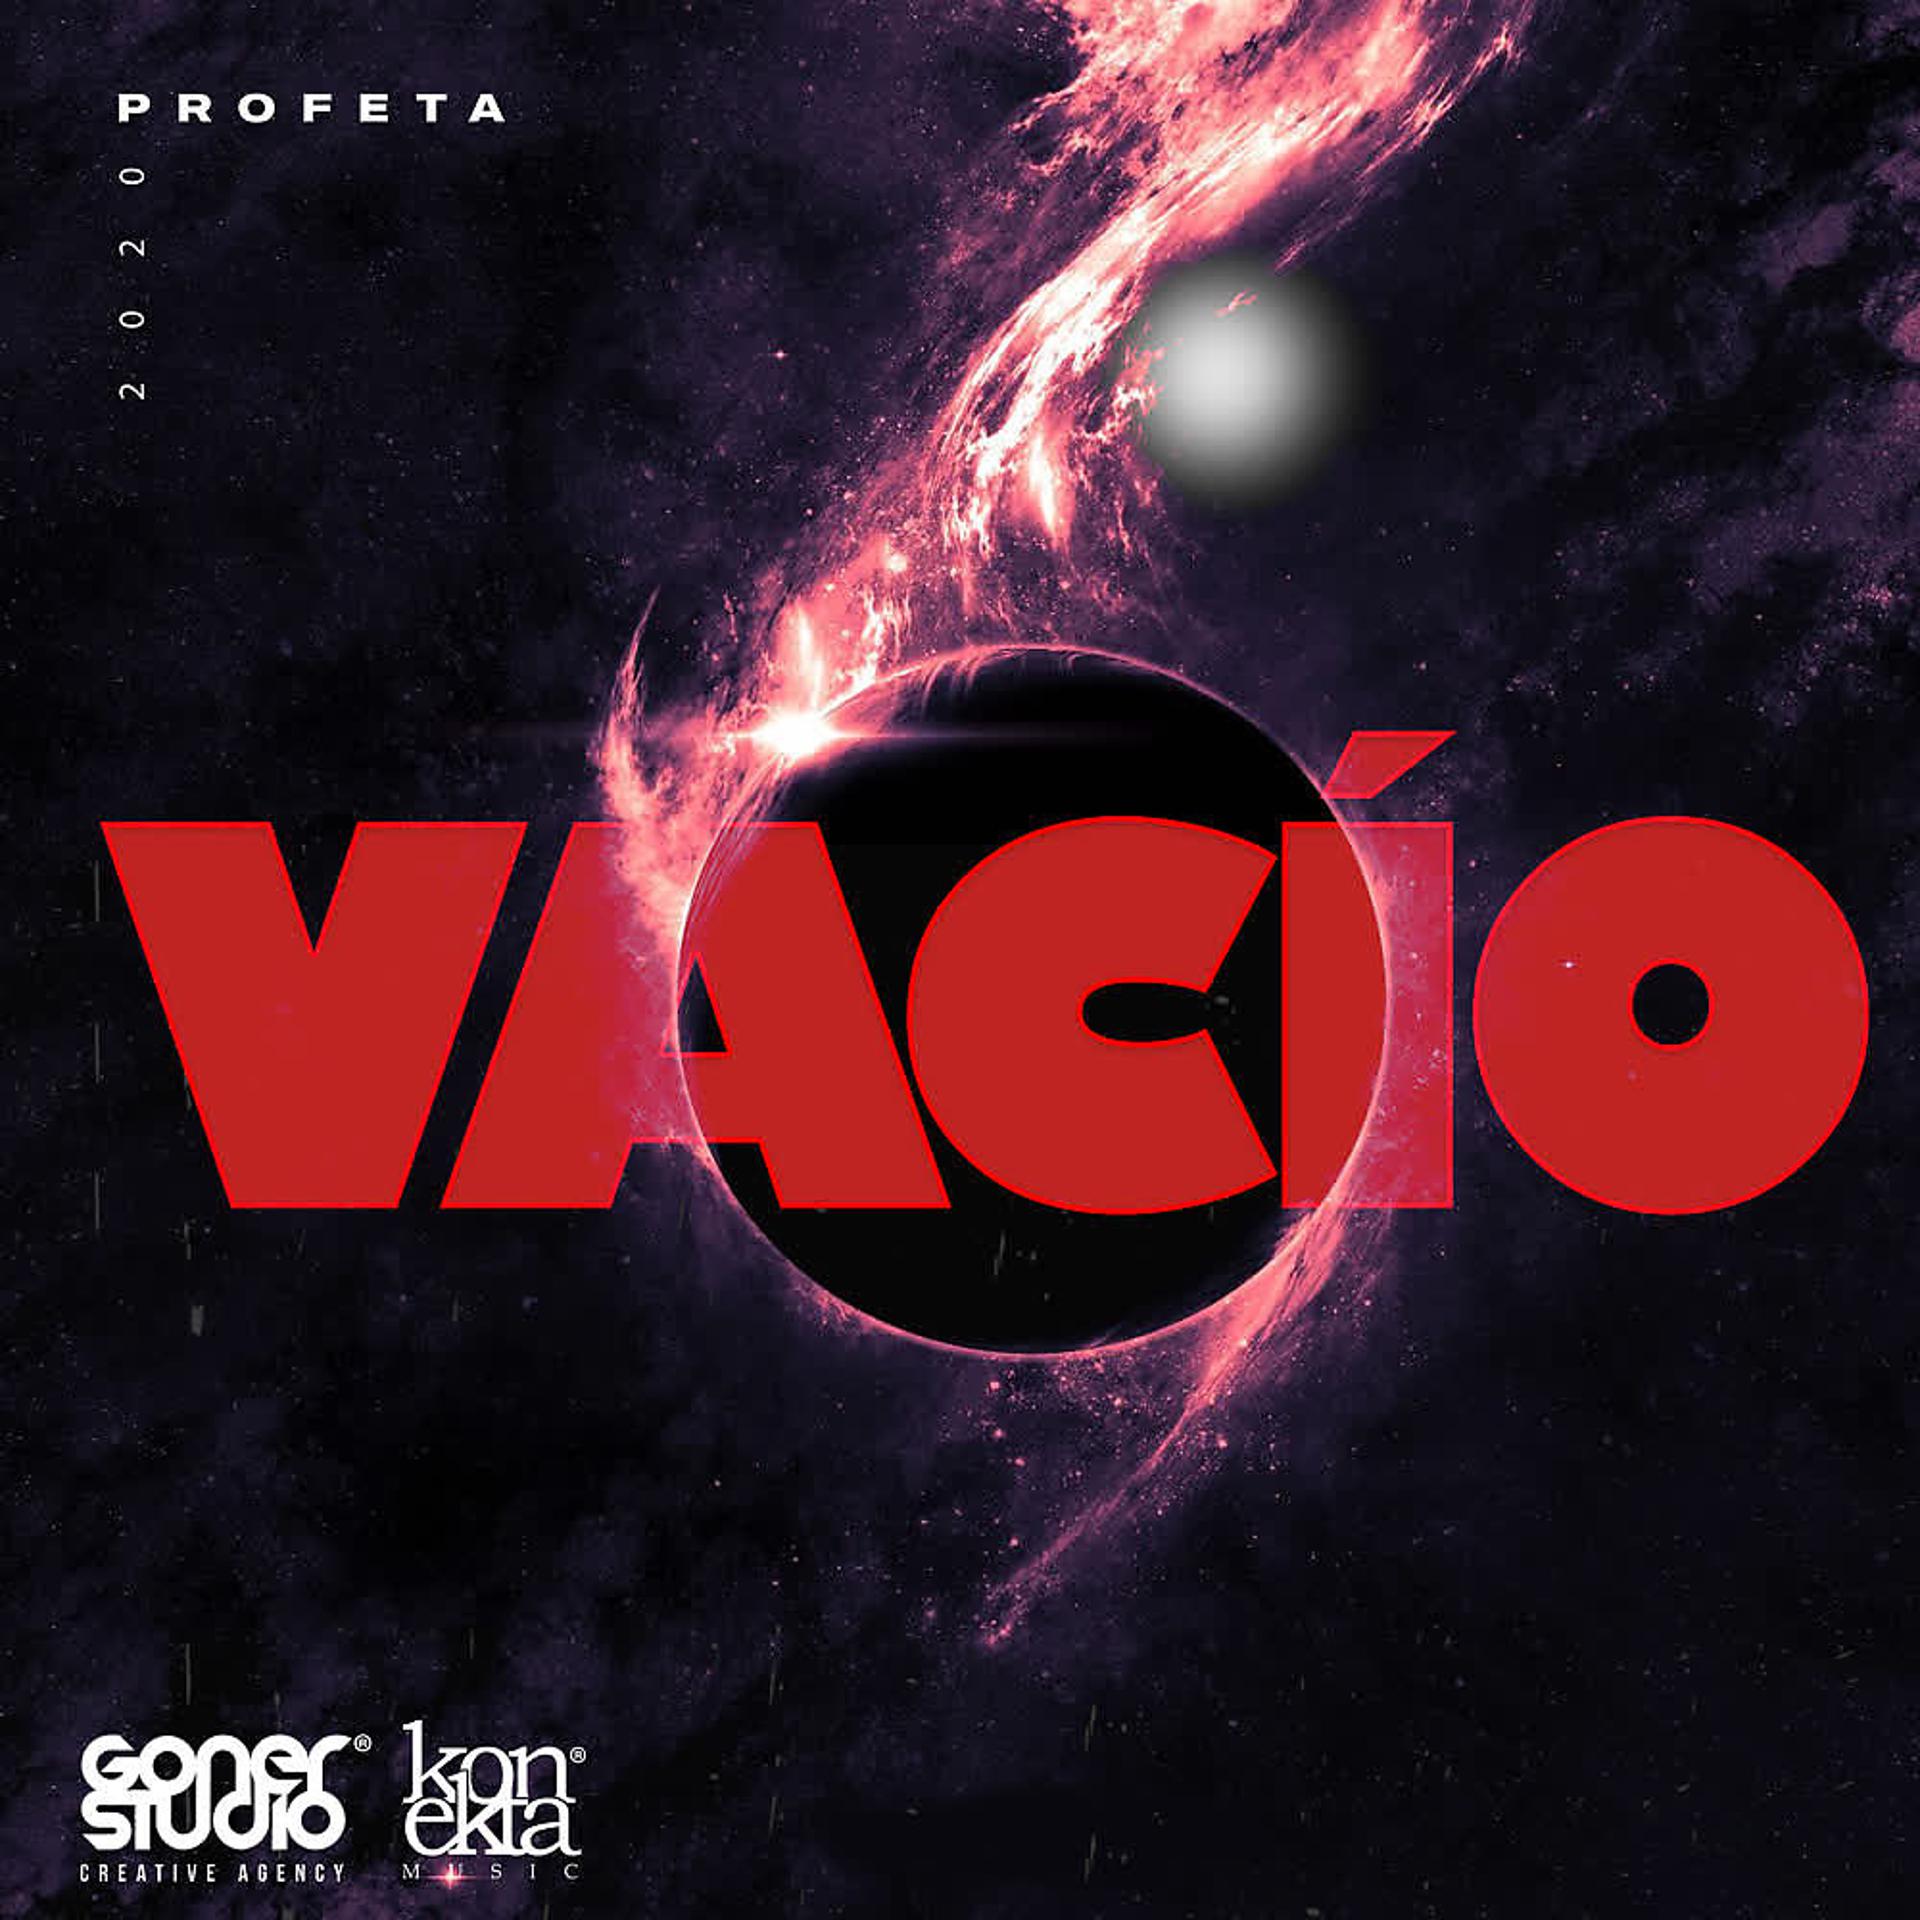 Постер альбома Vacío